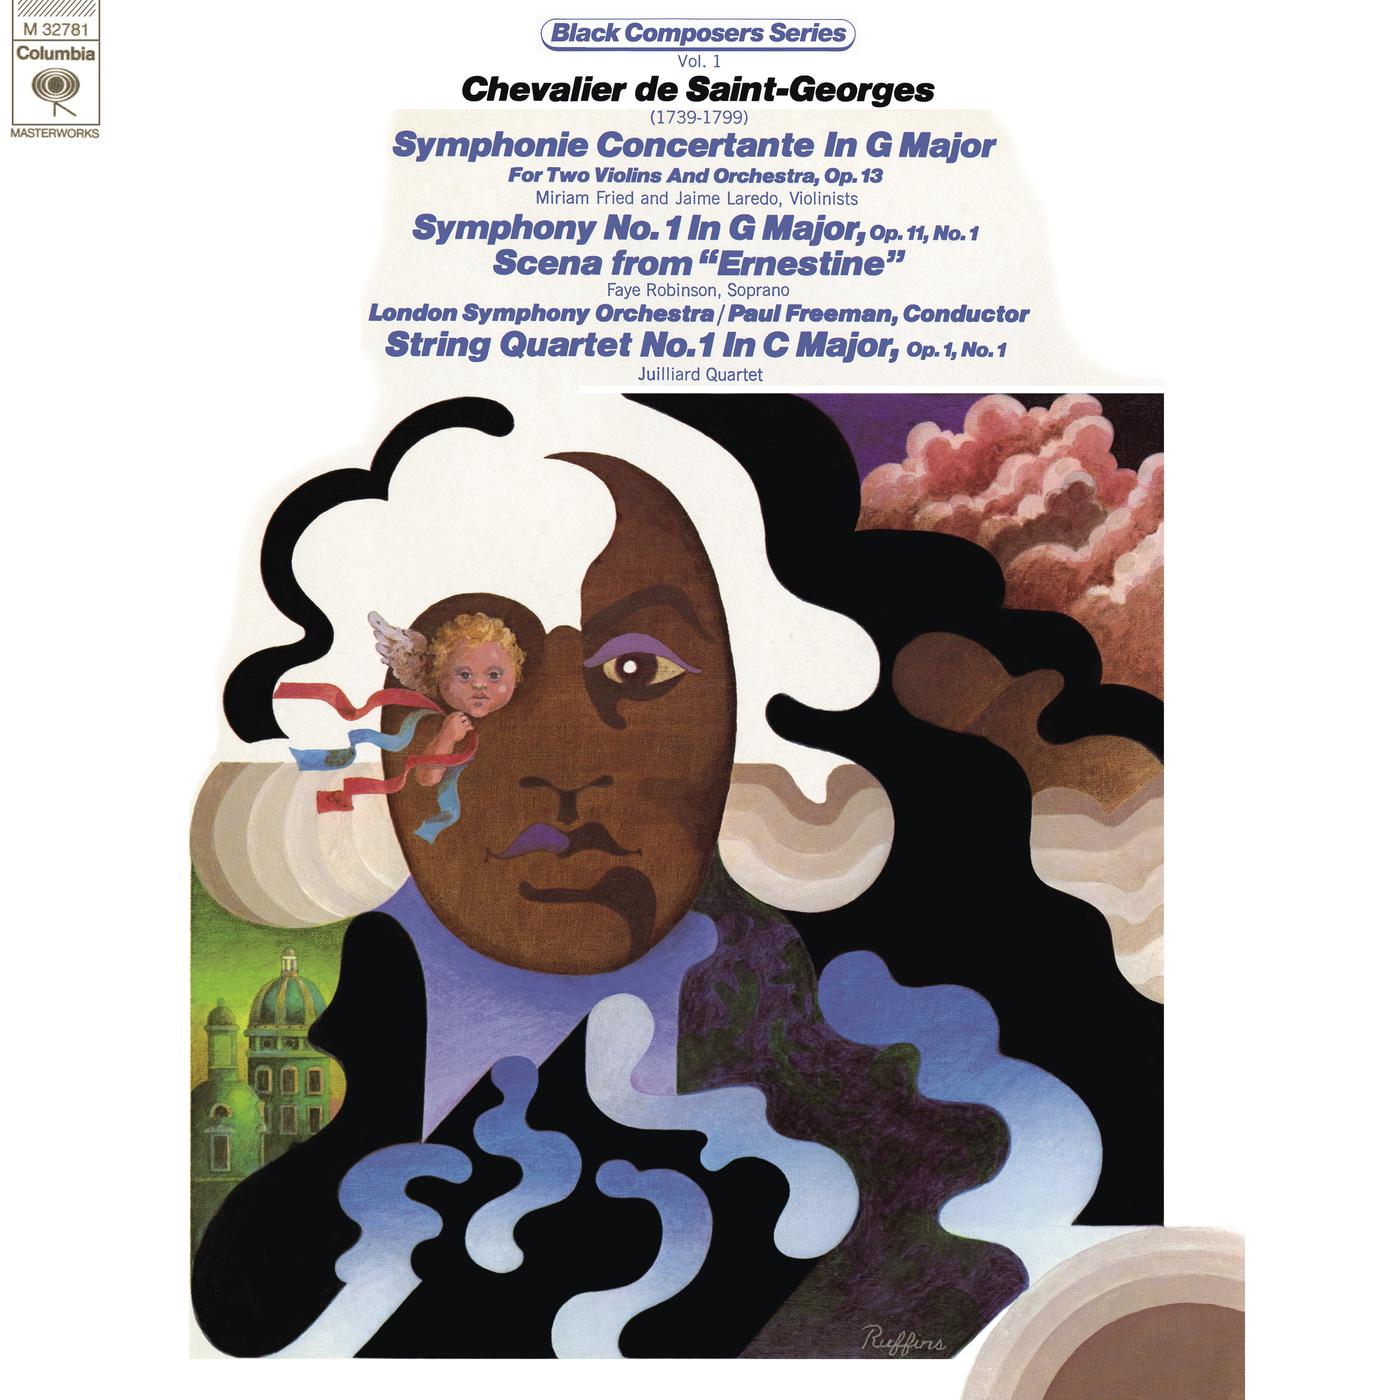 Black Composer Series, Vol. 1: Chevalier de Saint-Georges (Remastered)